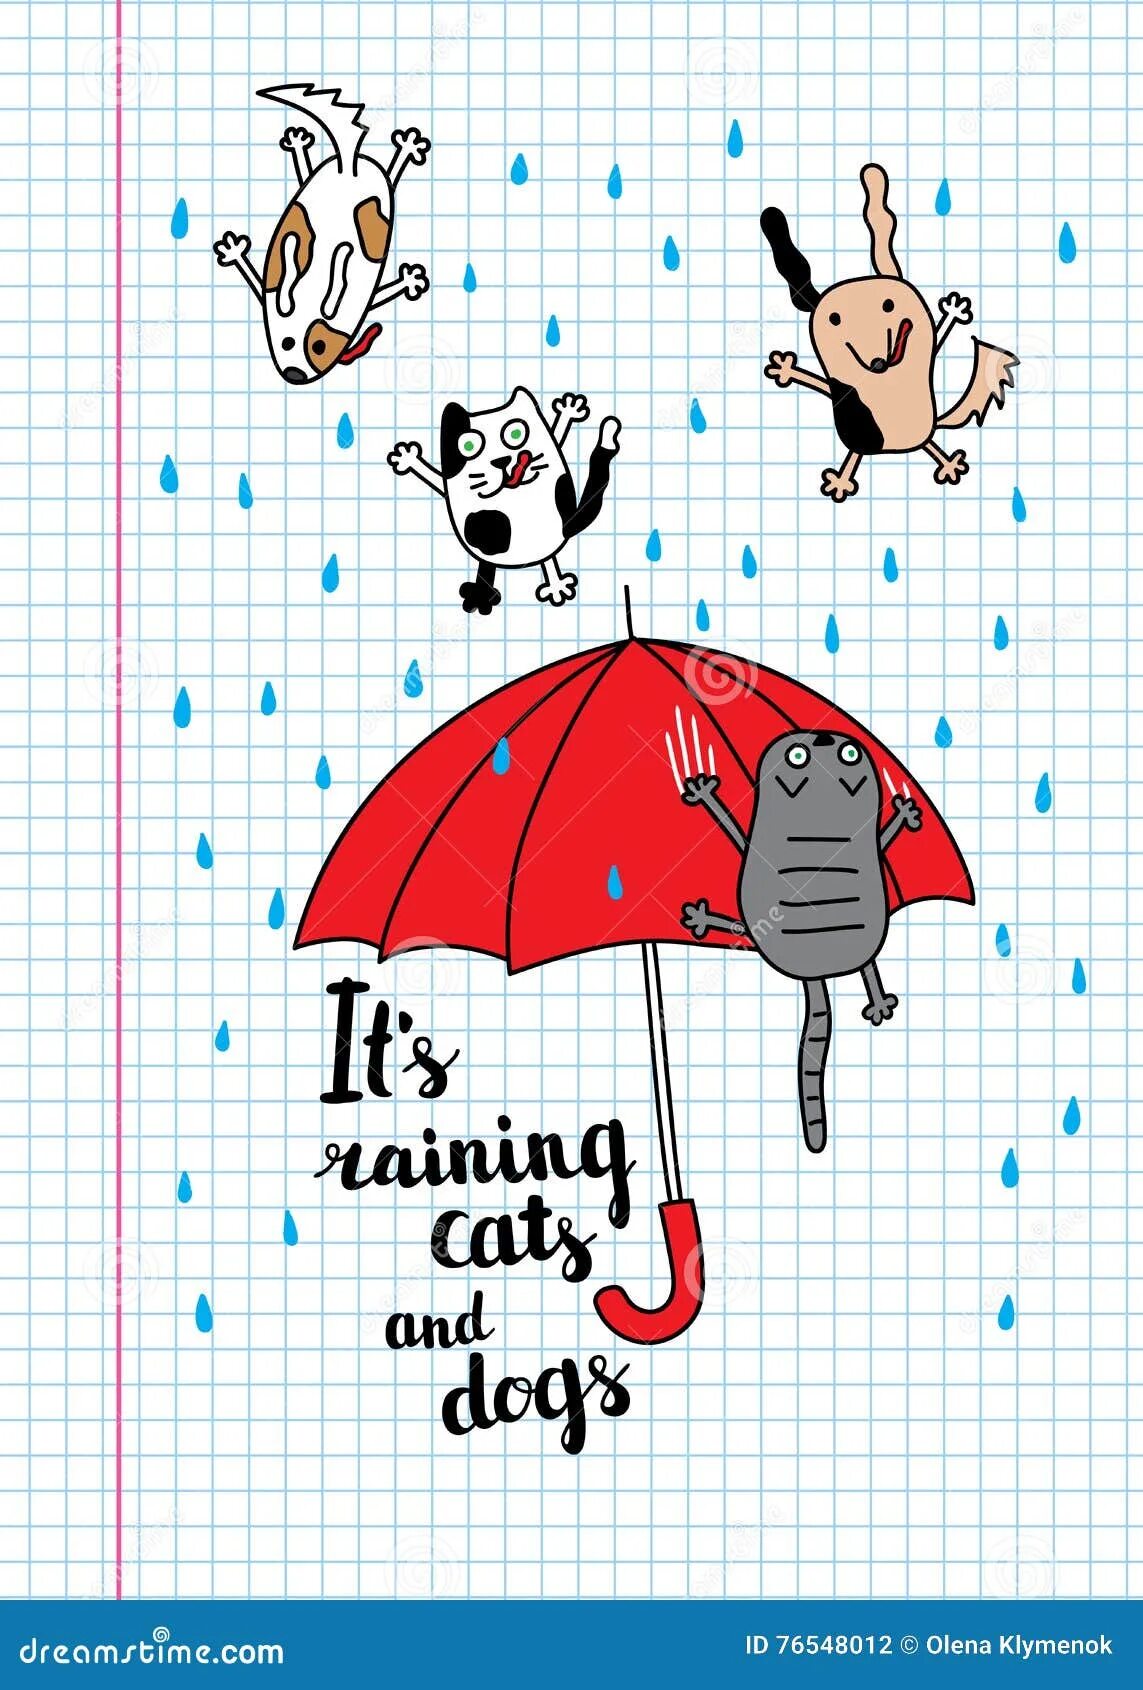 Идиома дождь из кошек и собак. Дождь кошками и собаками. Raining Cats and Dogs идиома. Идиома it's raining Cats and Dogs.